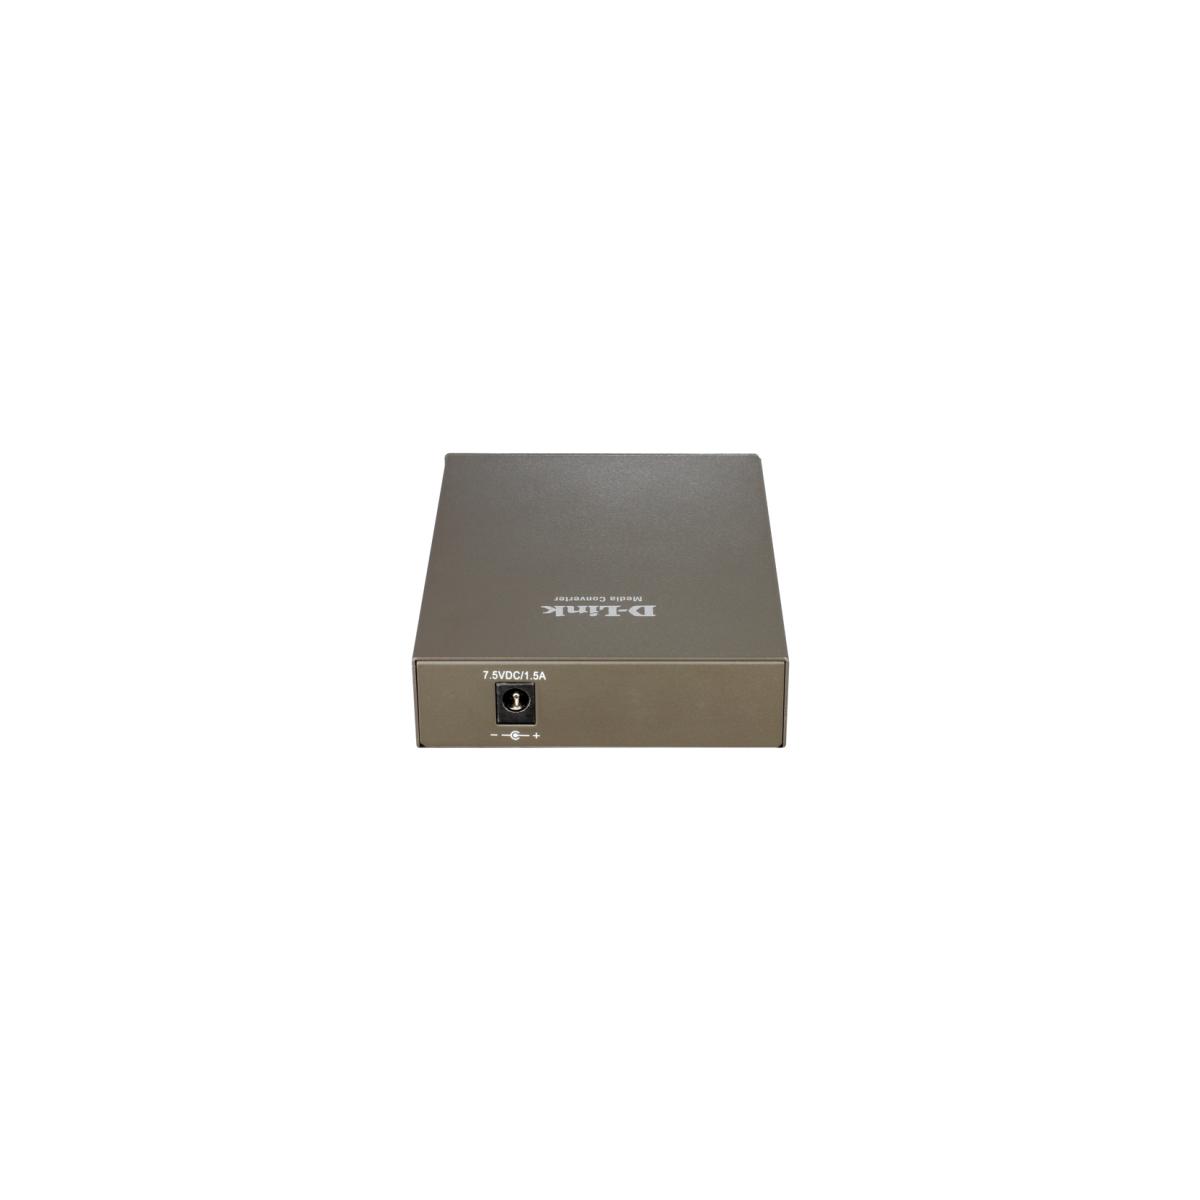 D-Link DMC-300SC 10/100 to 100BaseFX (SC) Multimode Media Converter